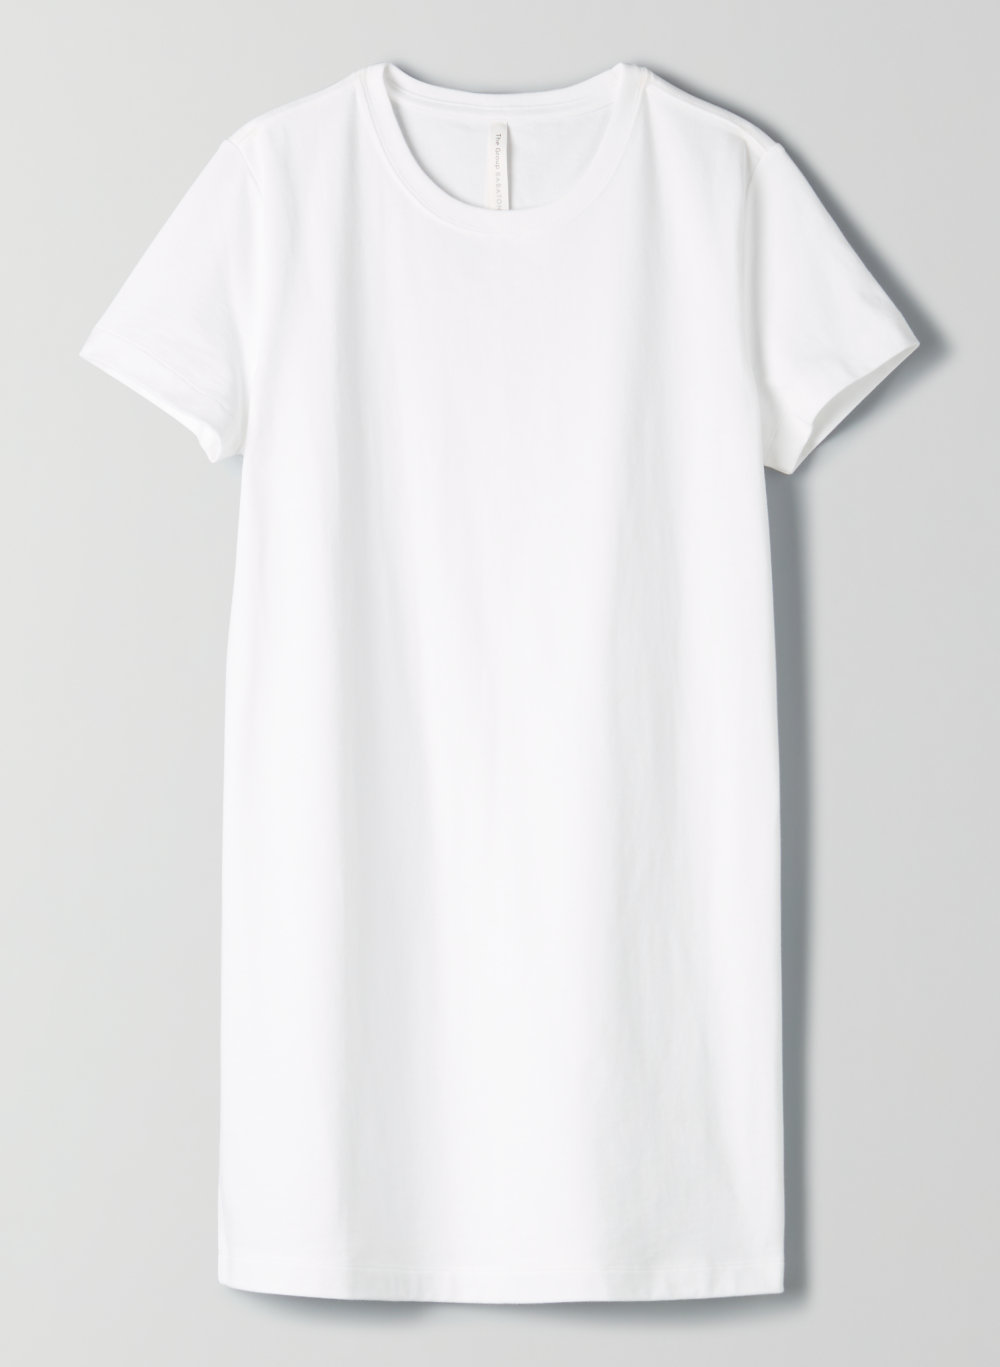 dress and white t shirt